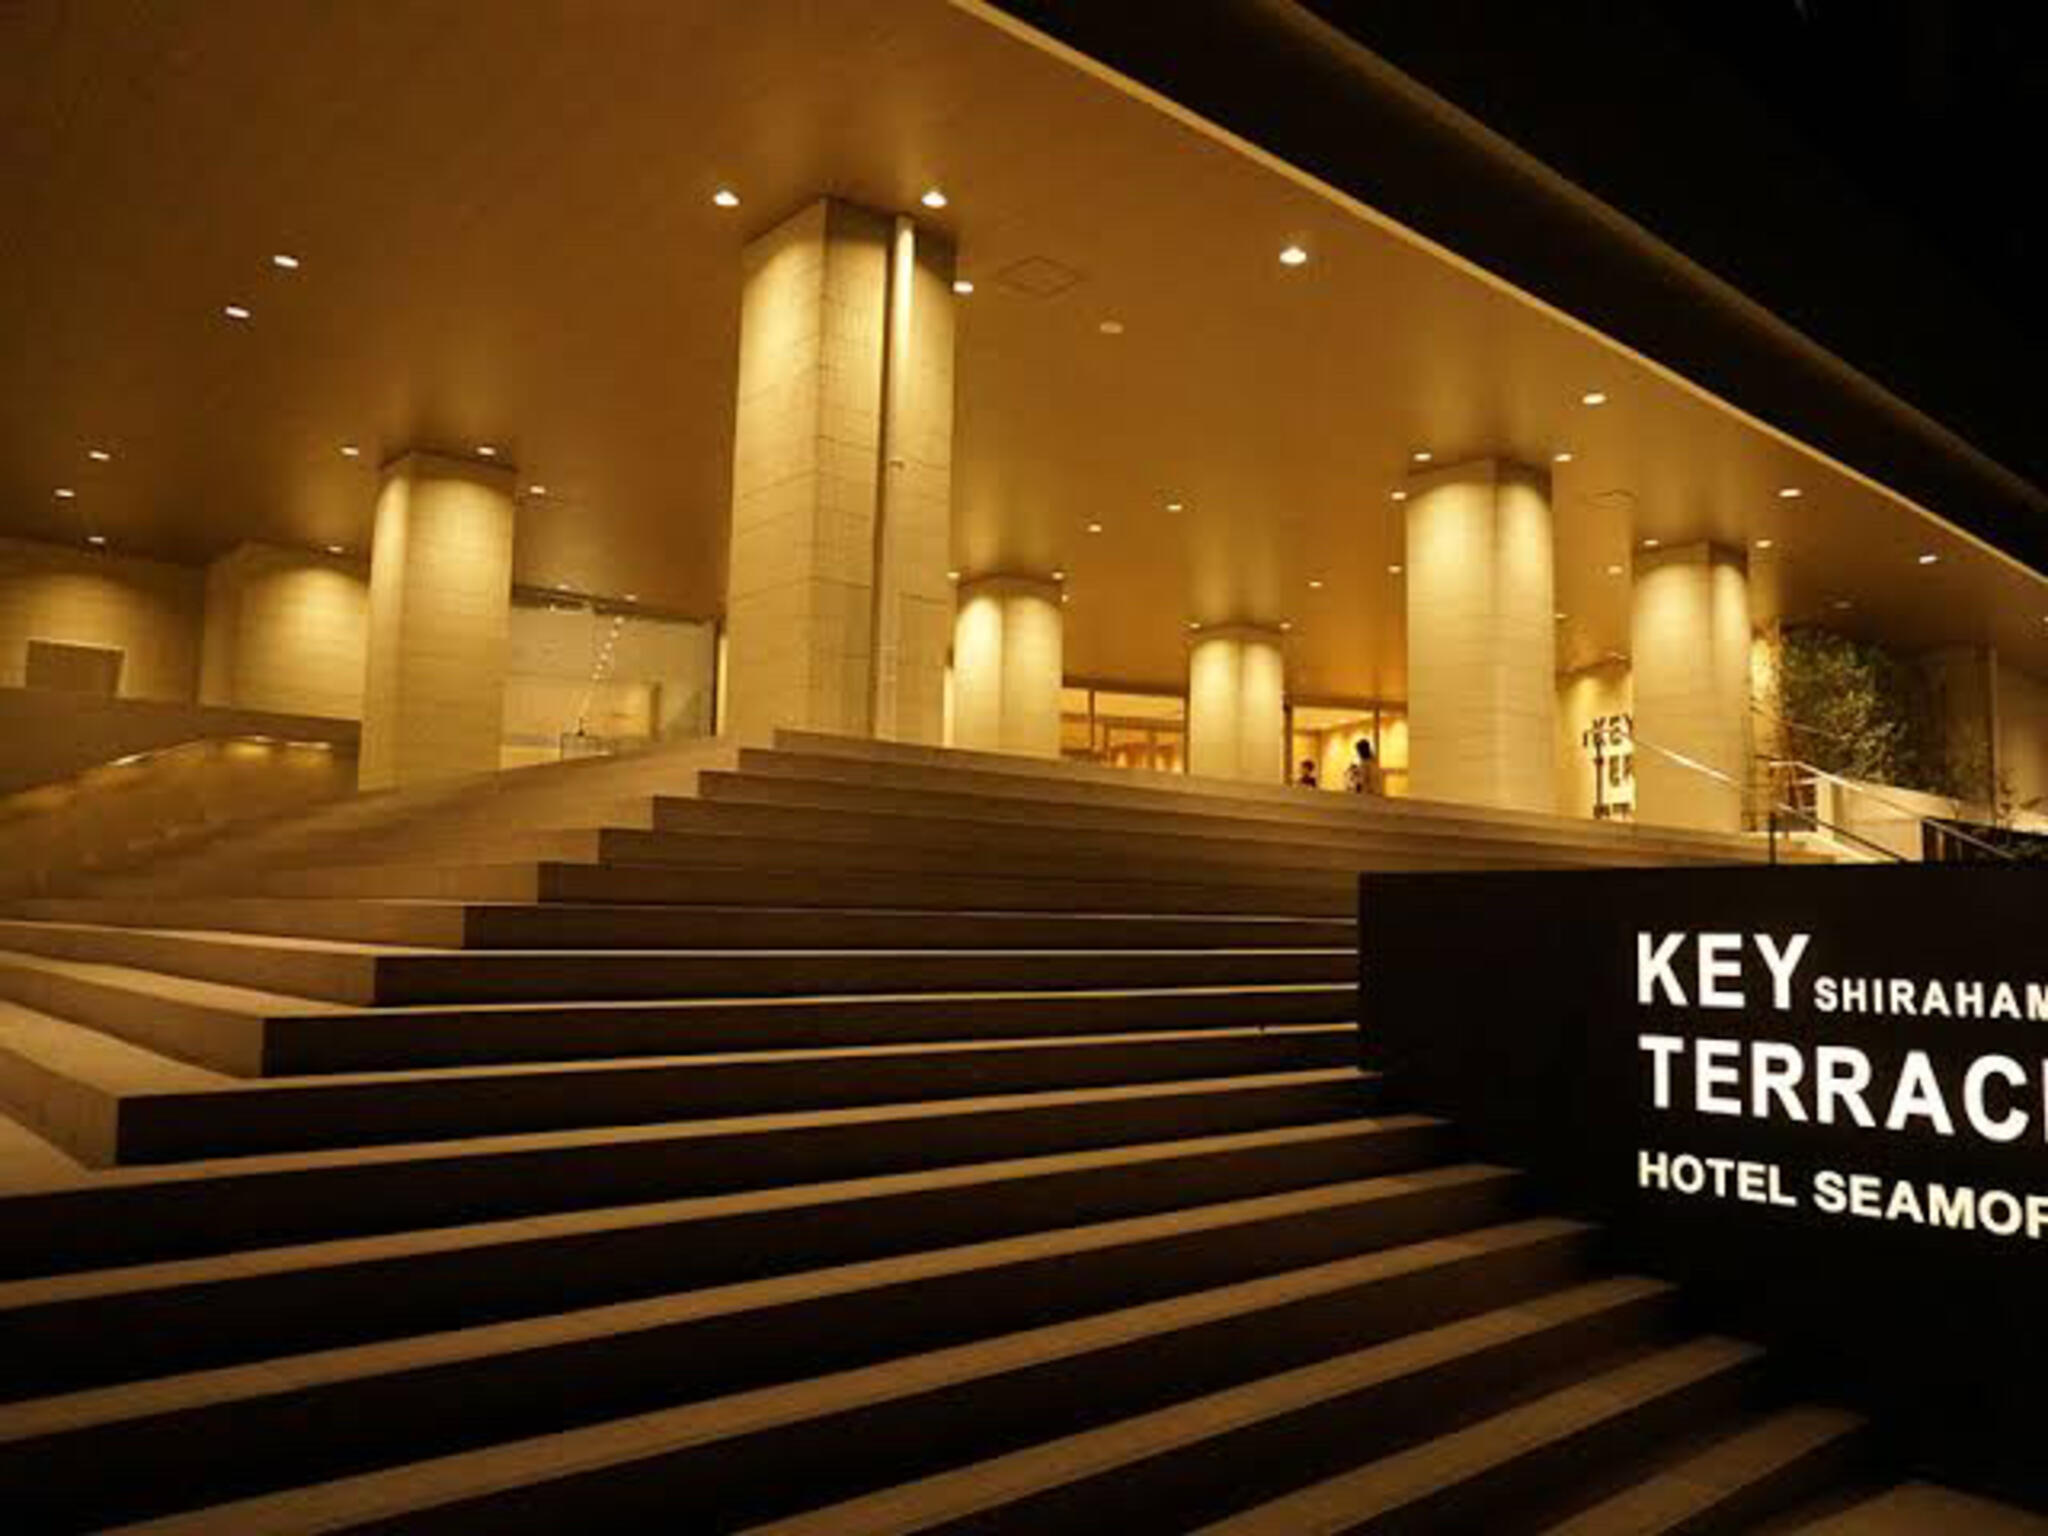 SHIRAHAMA KEY TERRACE HOTEL SEAMOREの代表写真1